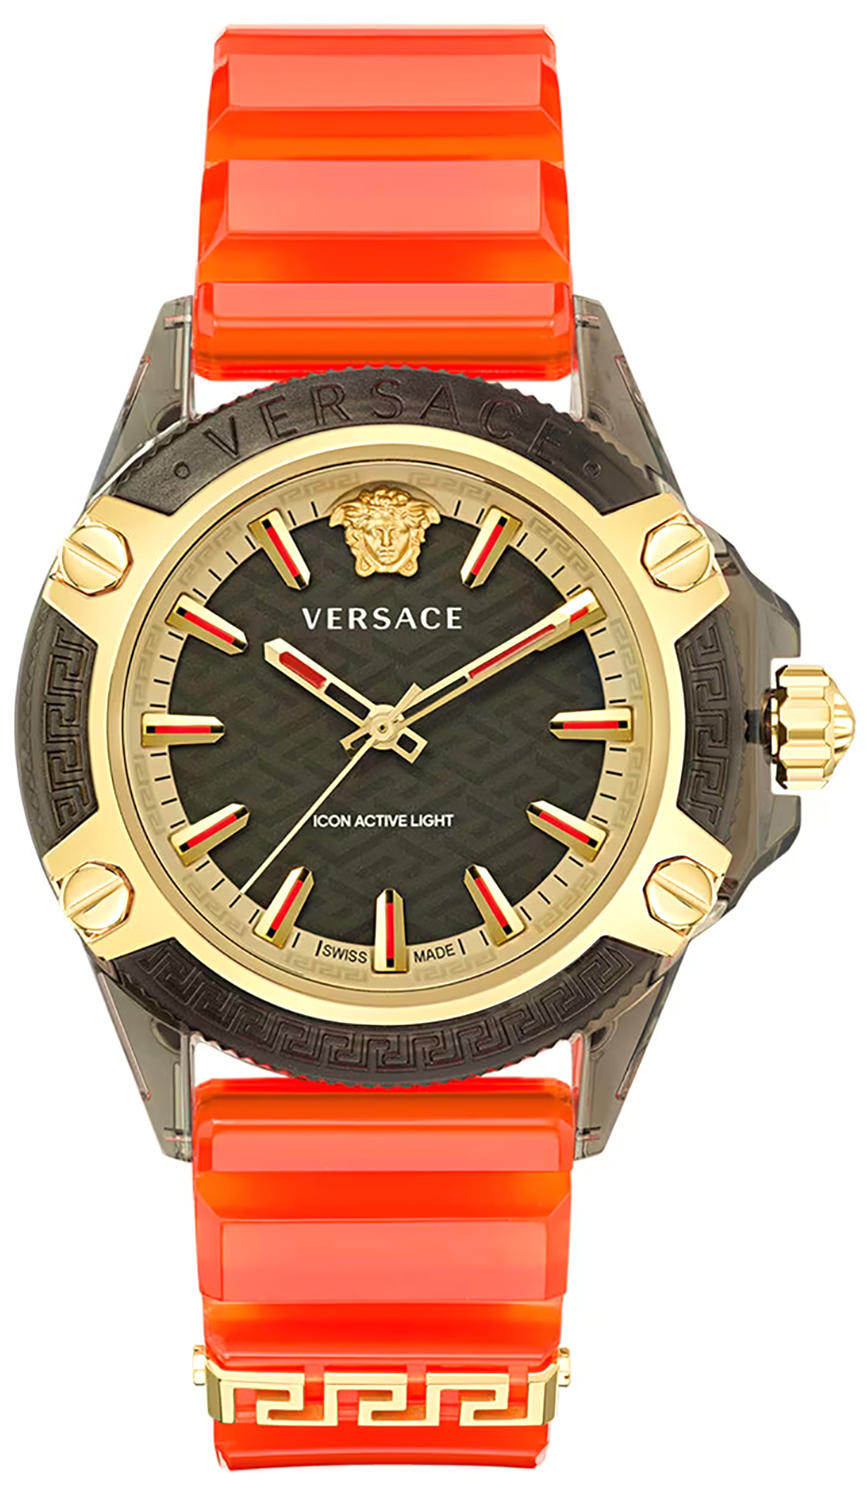 Zegarek Versace VE6E00223 ICON ACTIVE